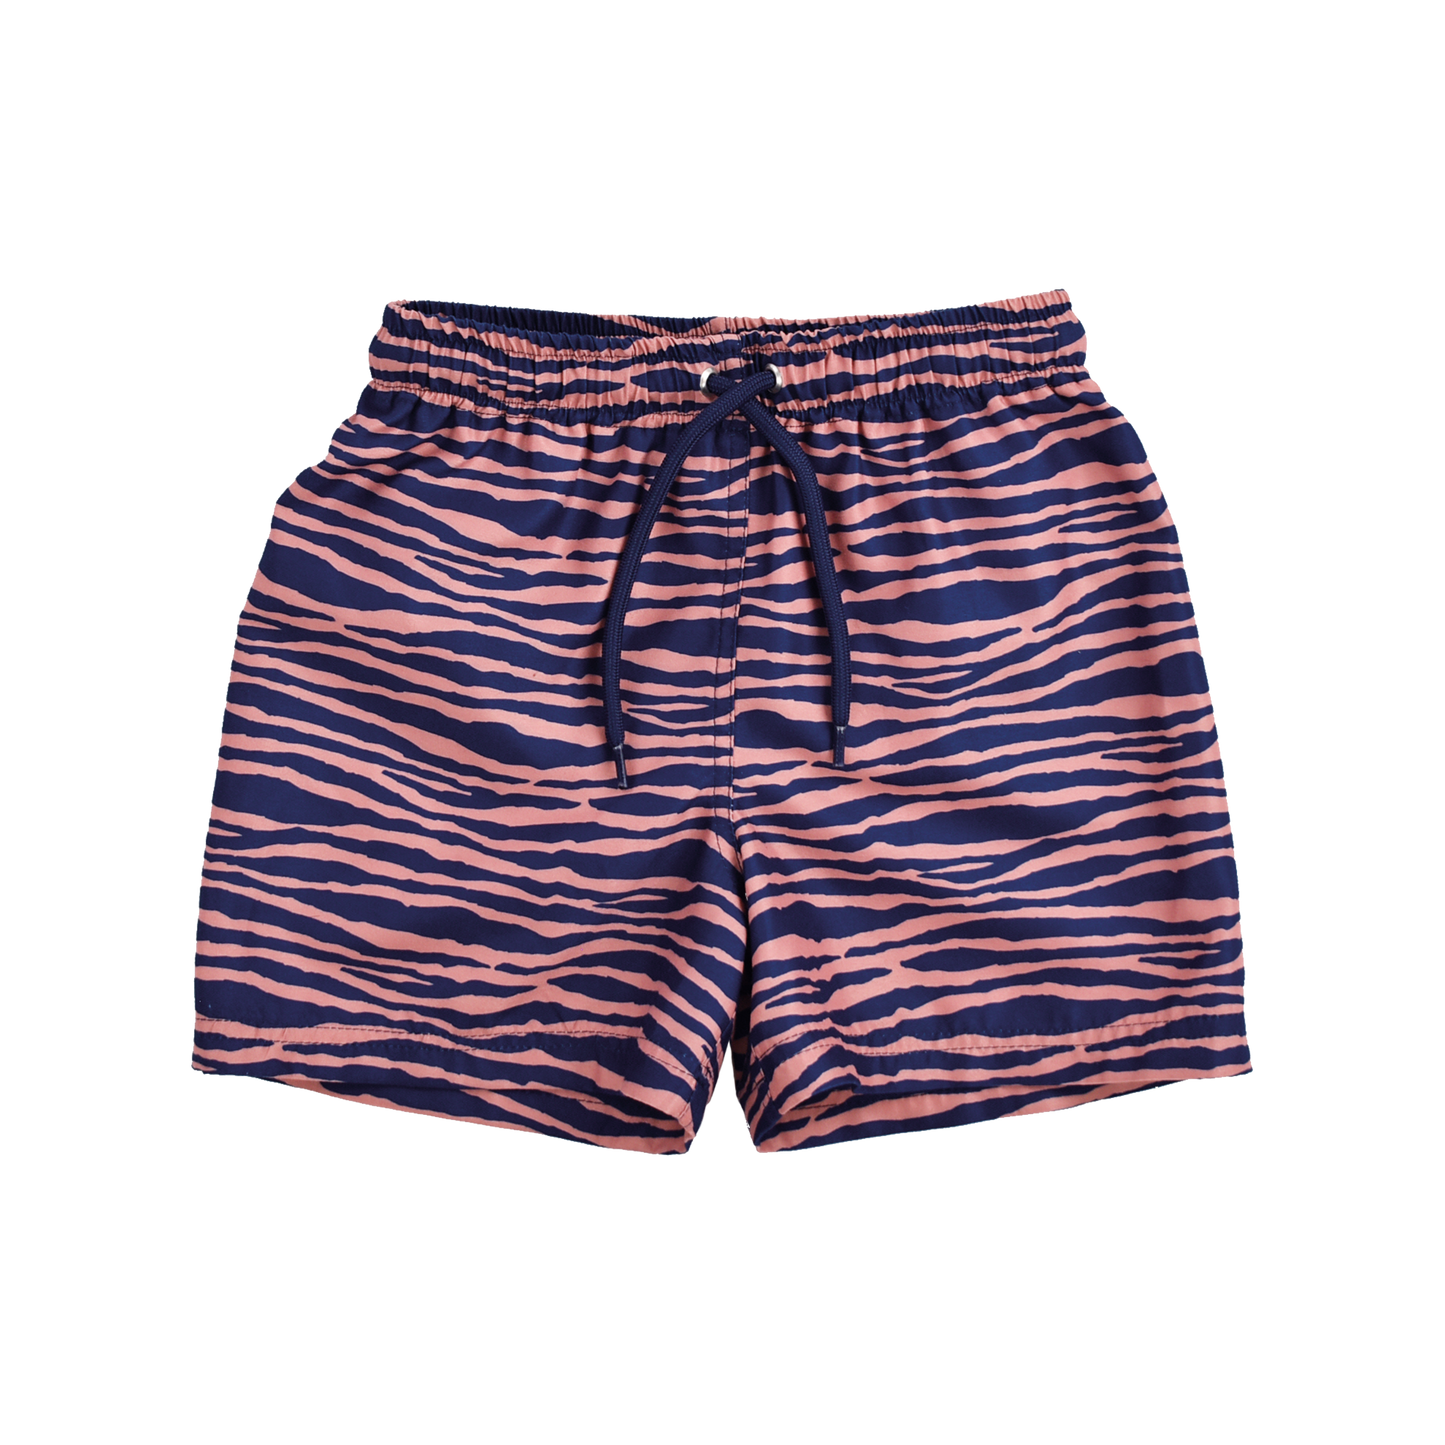 SE UV Zwemshort Jongens Blauw Oranje Zebra